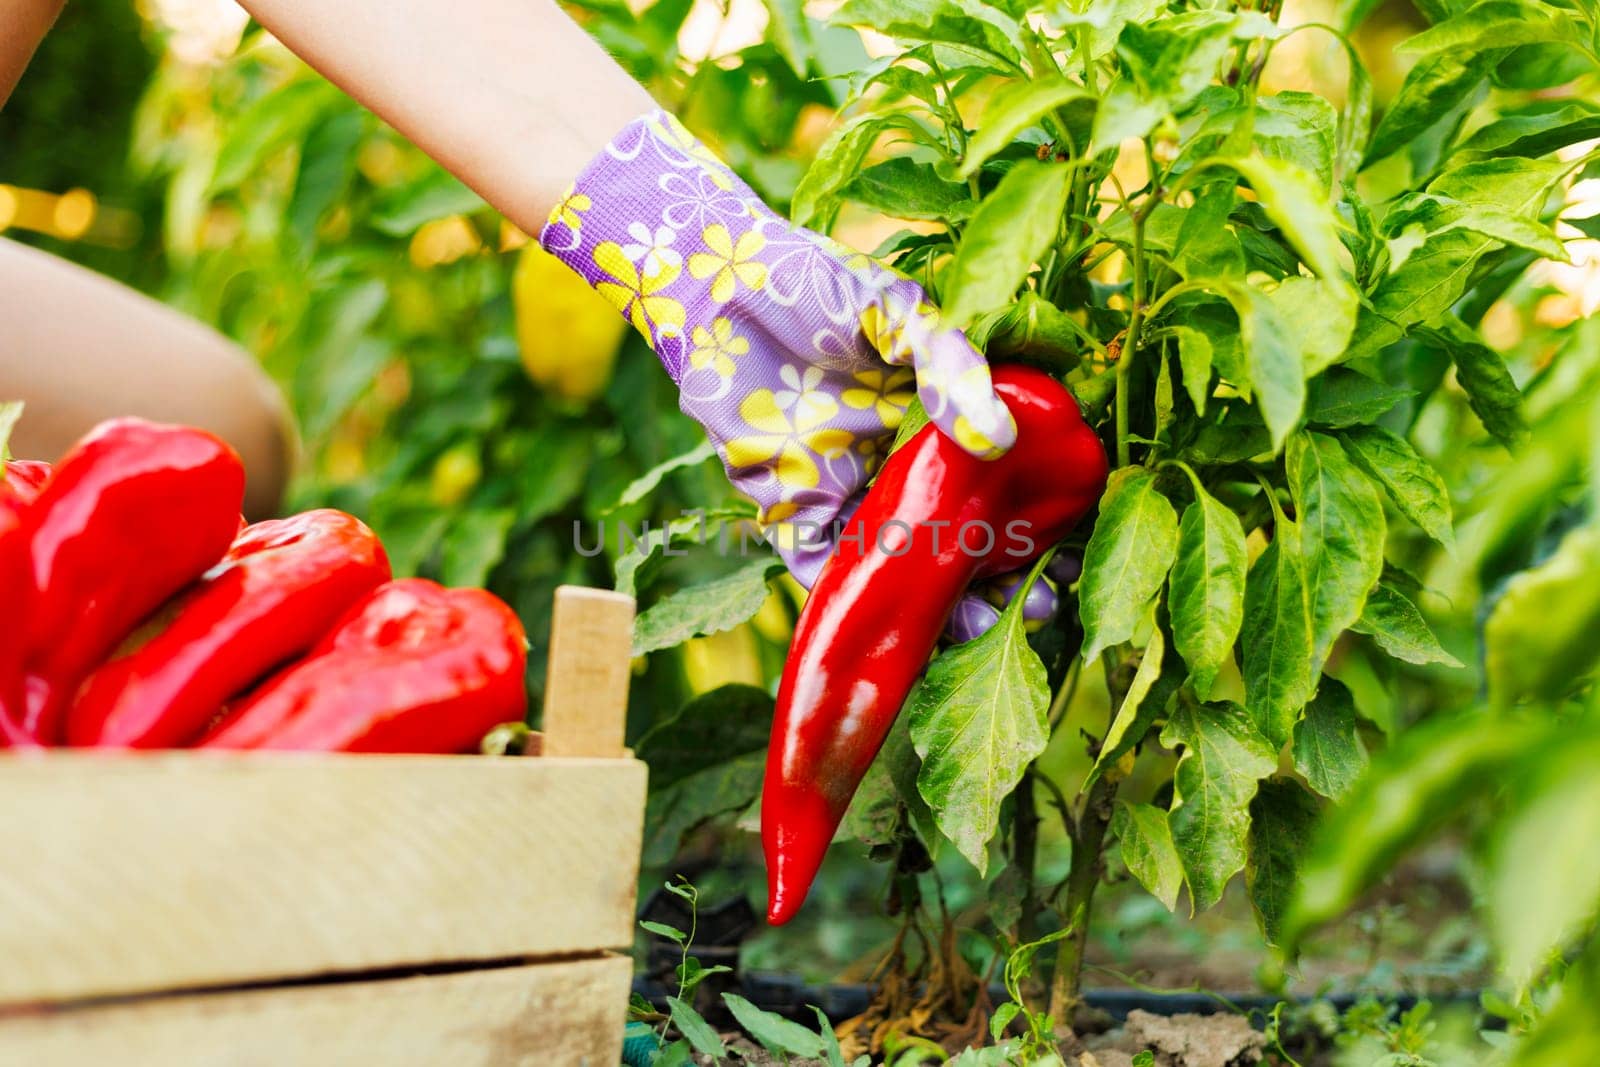 Gardener wearing floral gloves picking fresh red peppers in a sunny vegetable garden.